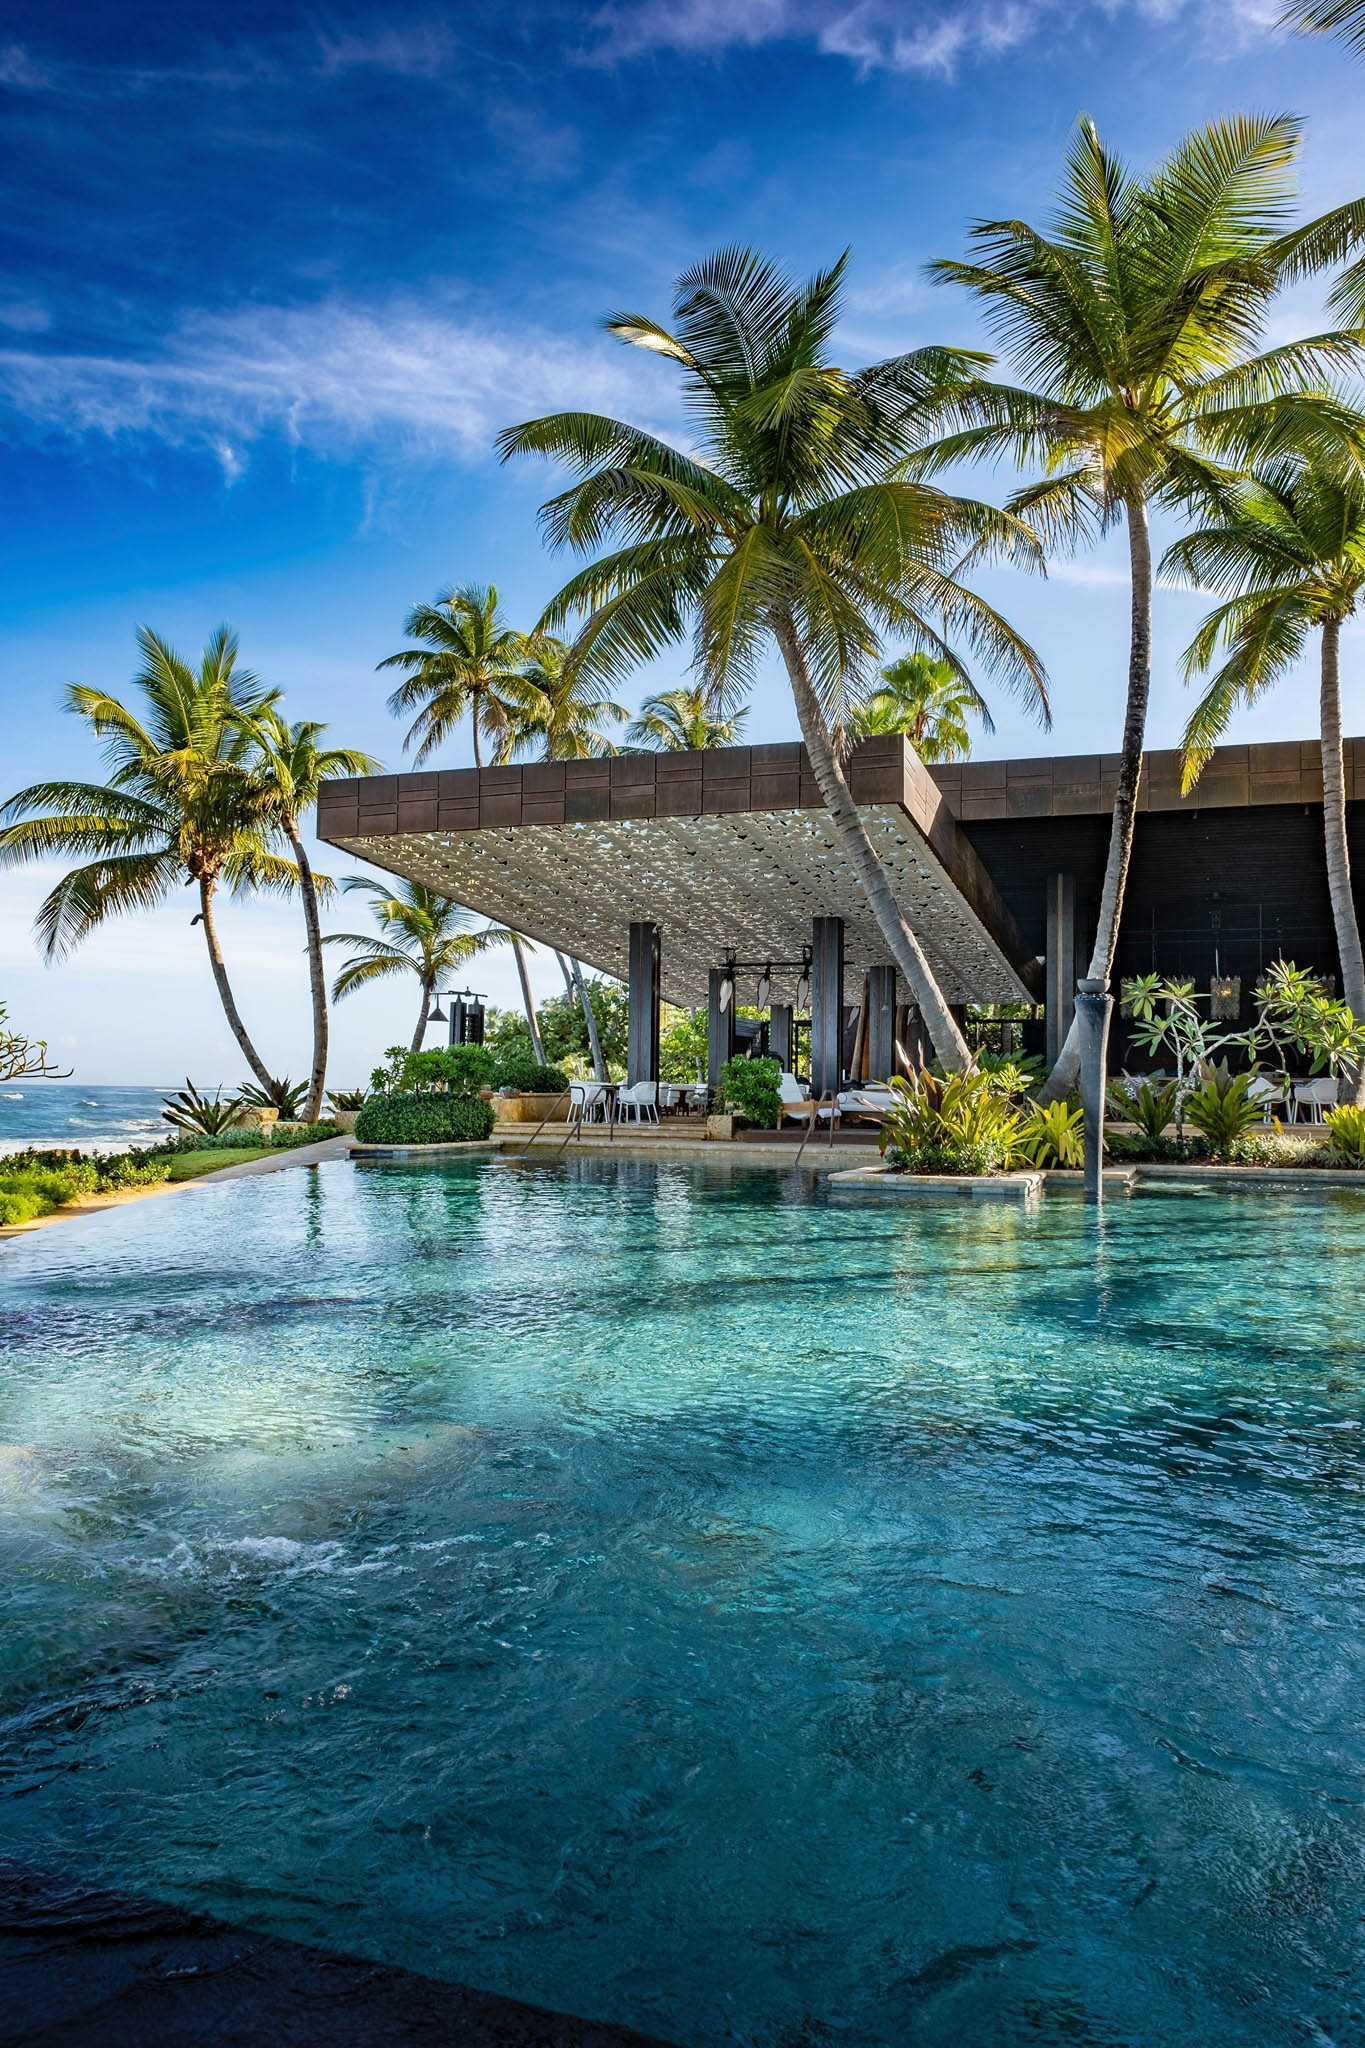 The Ritz-Carlton, Dorado Beach Reserve Resort - Puerto Rico - Positivo Pool and Restaurant View